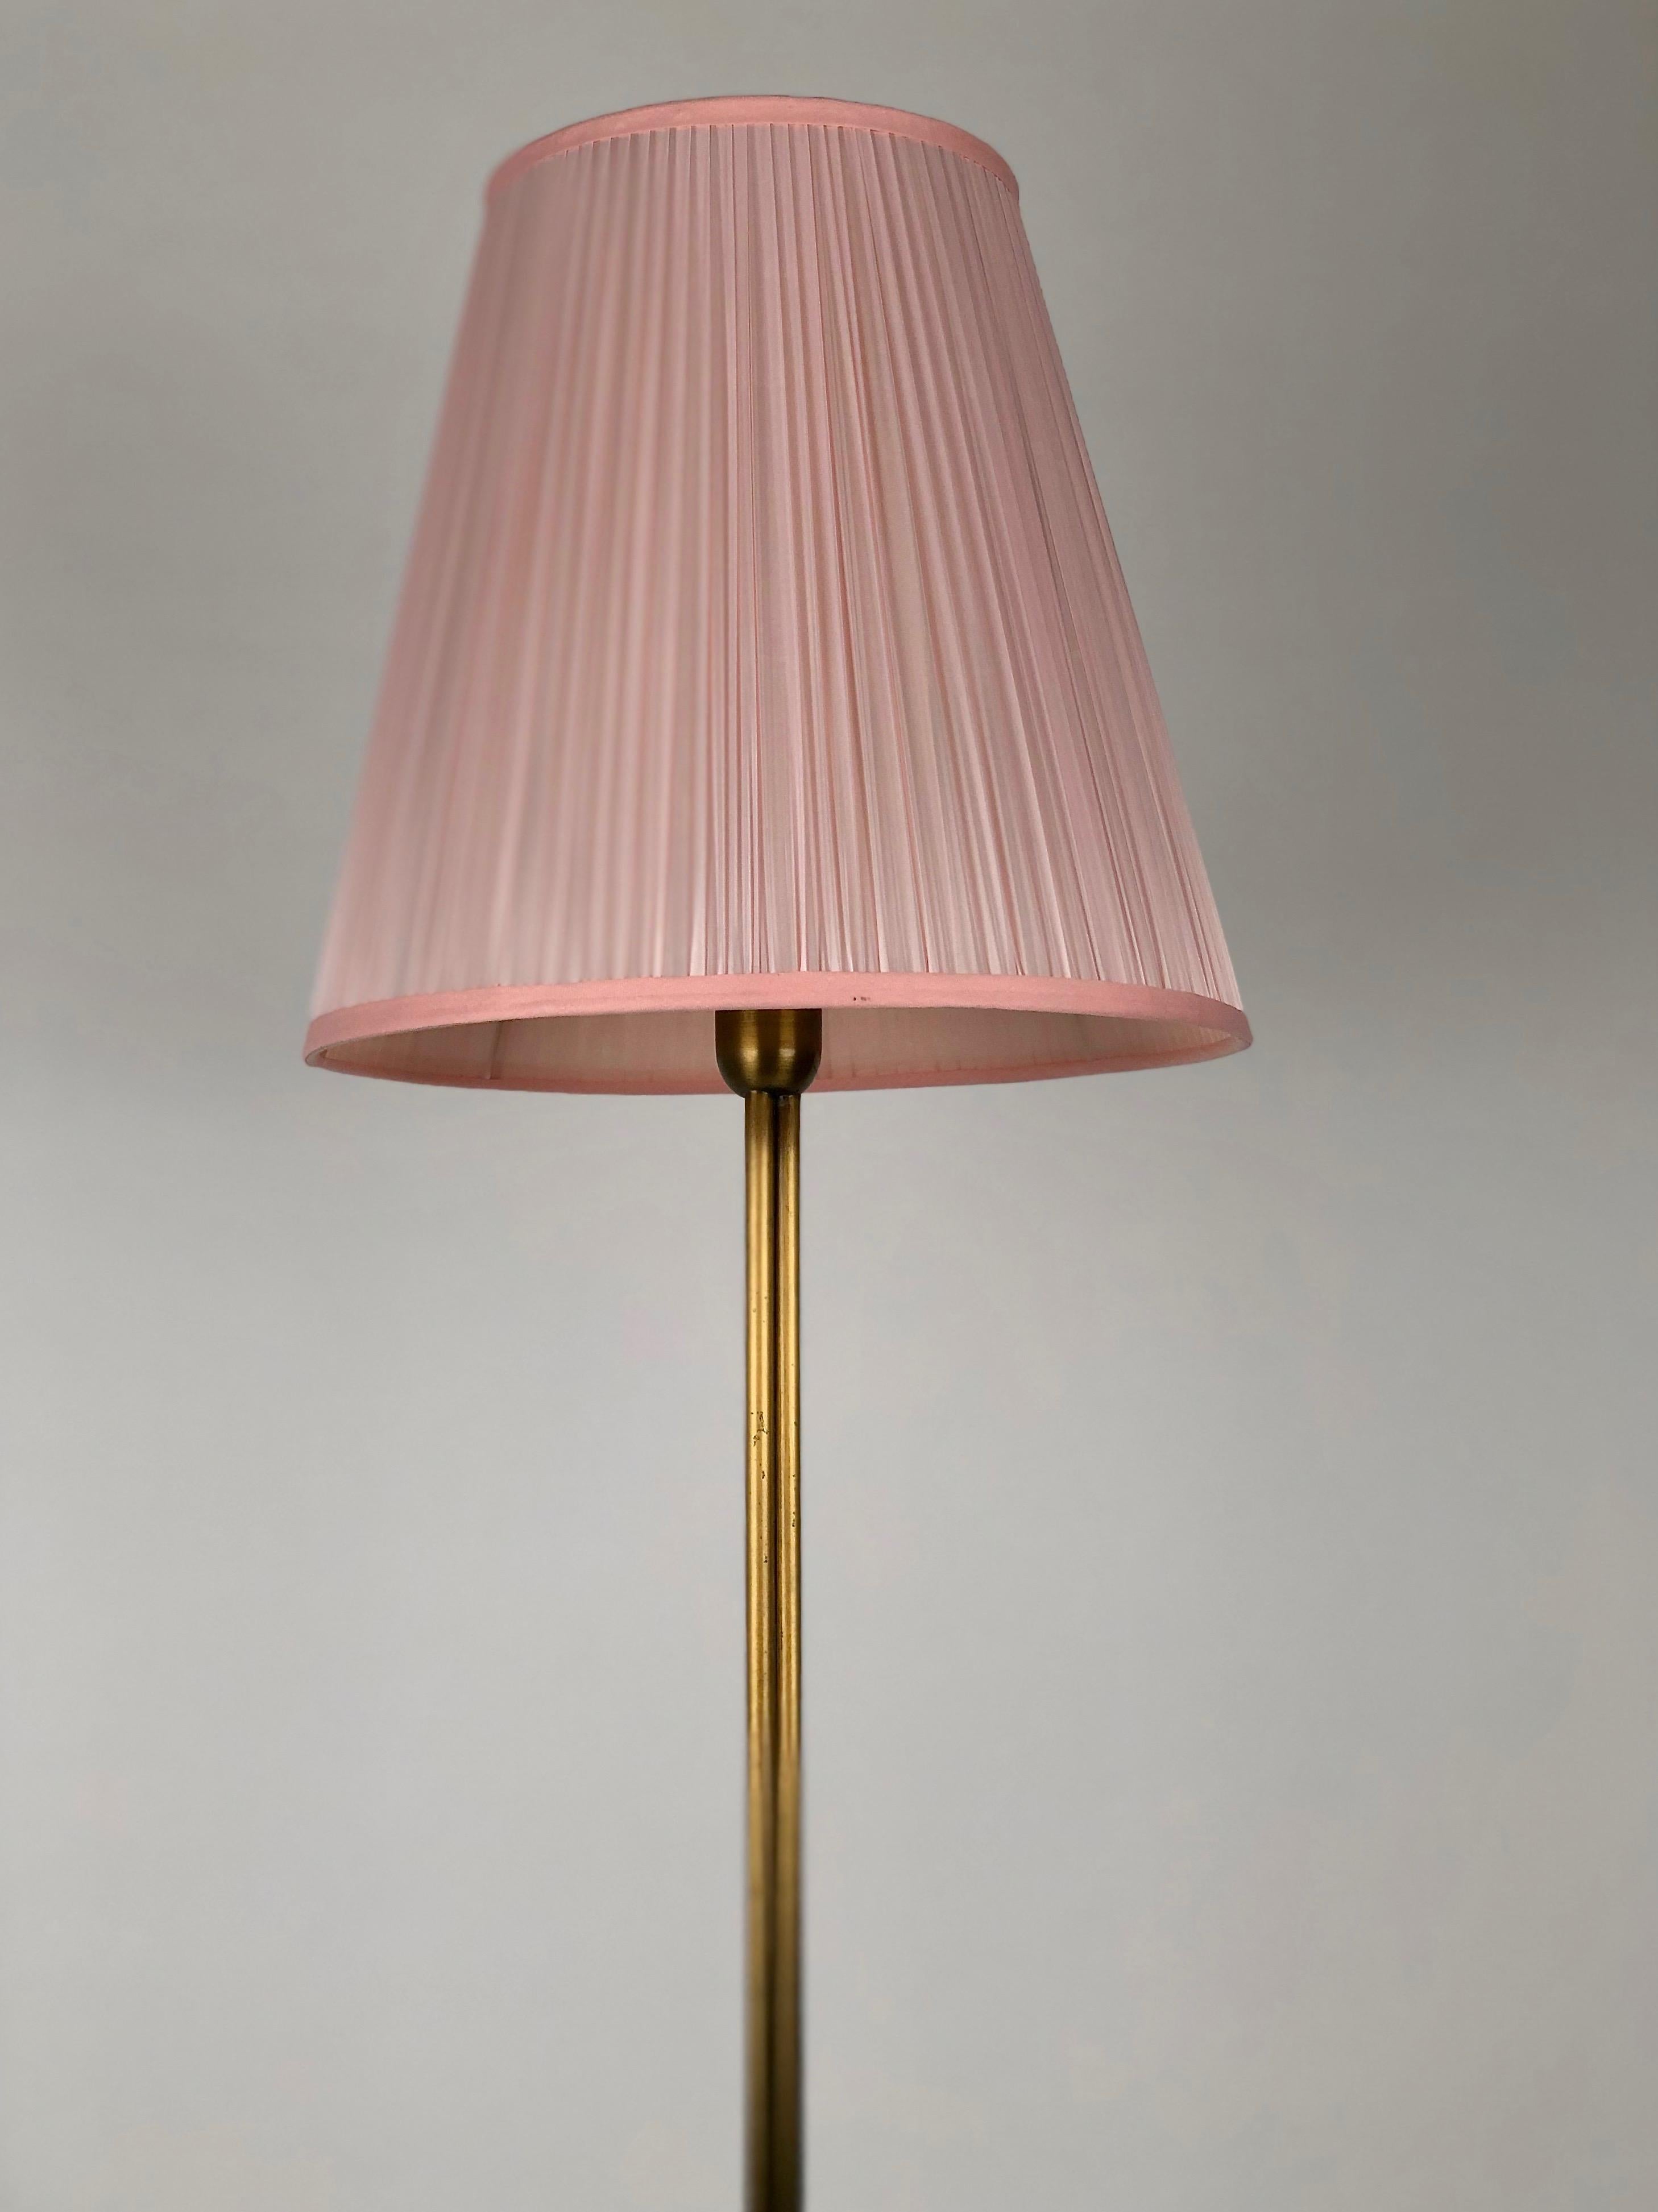 Elegant Brass Floor Lamp from the 1950's, Austria For Sale 6